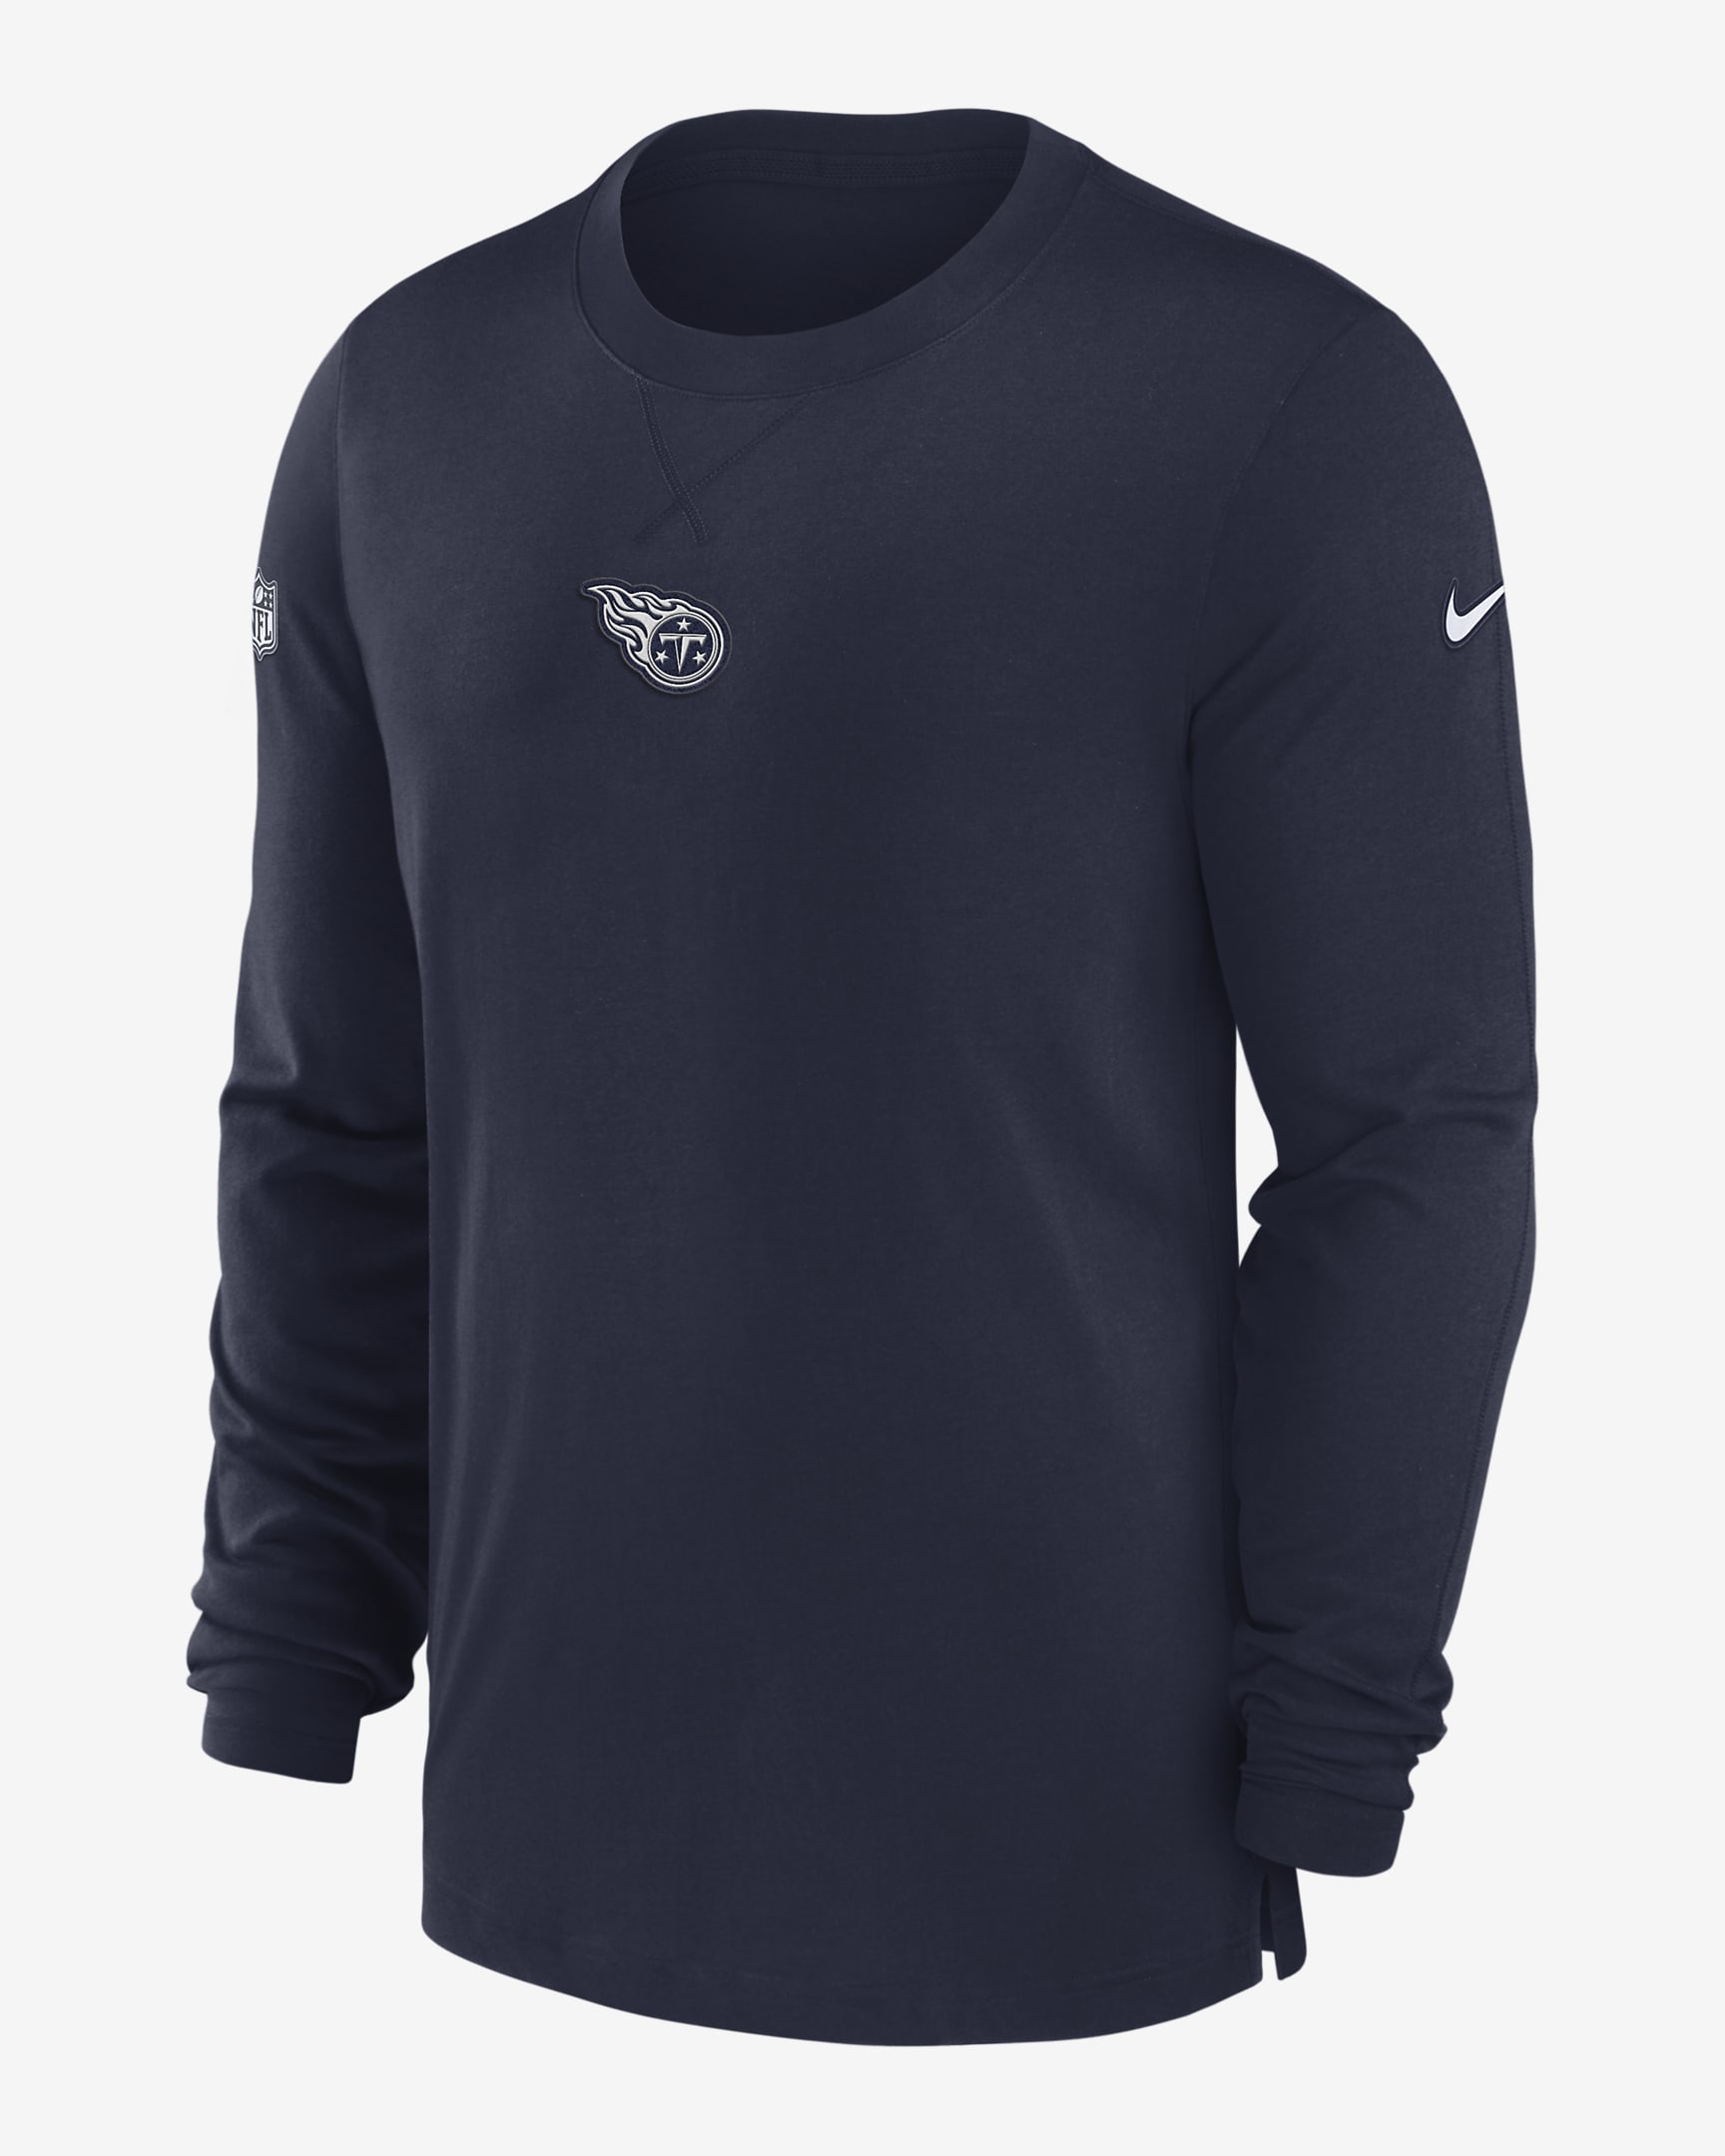 Tennessee Titans Sideline Men’s Nike Dri-FIT NFL Long-Sleeve Top. Nike.com